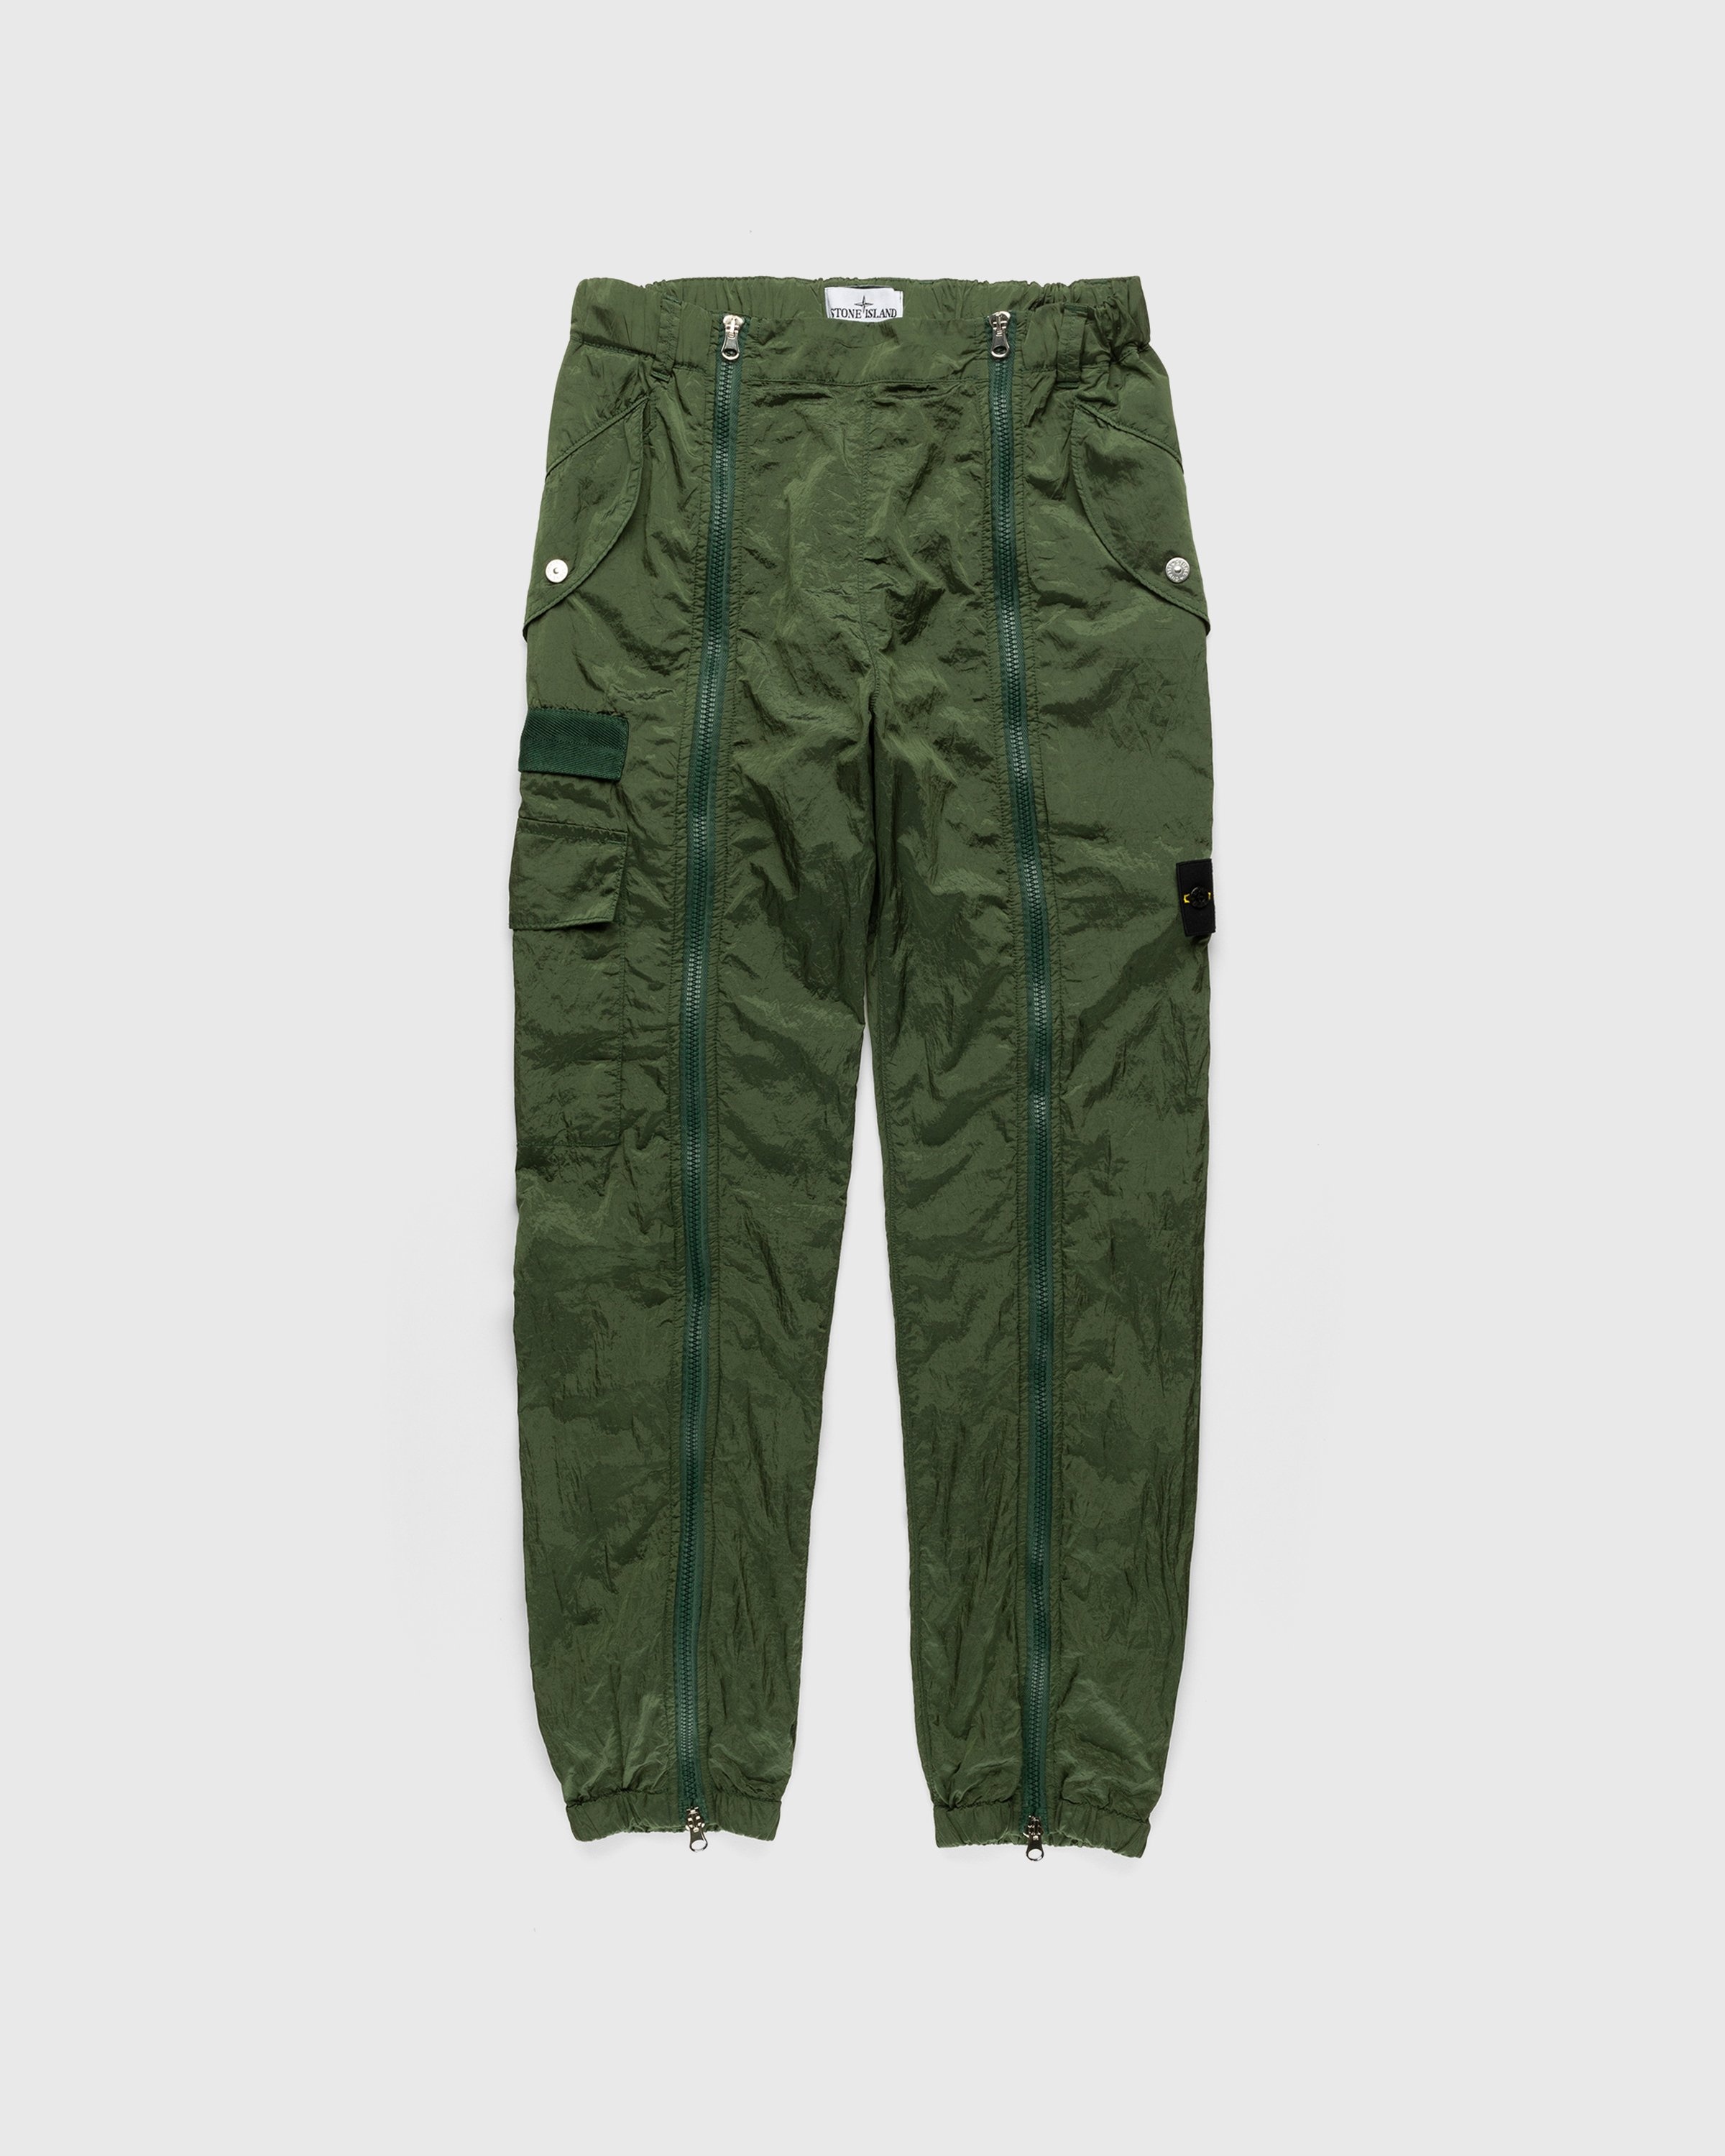 Stone Island – Nylon Metal Cargo Pants Olive - Pants - Green - Image 1